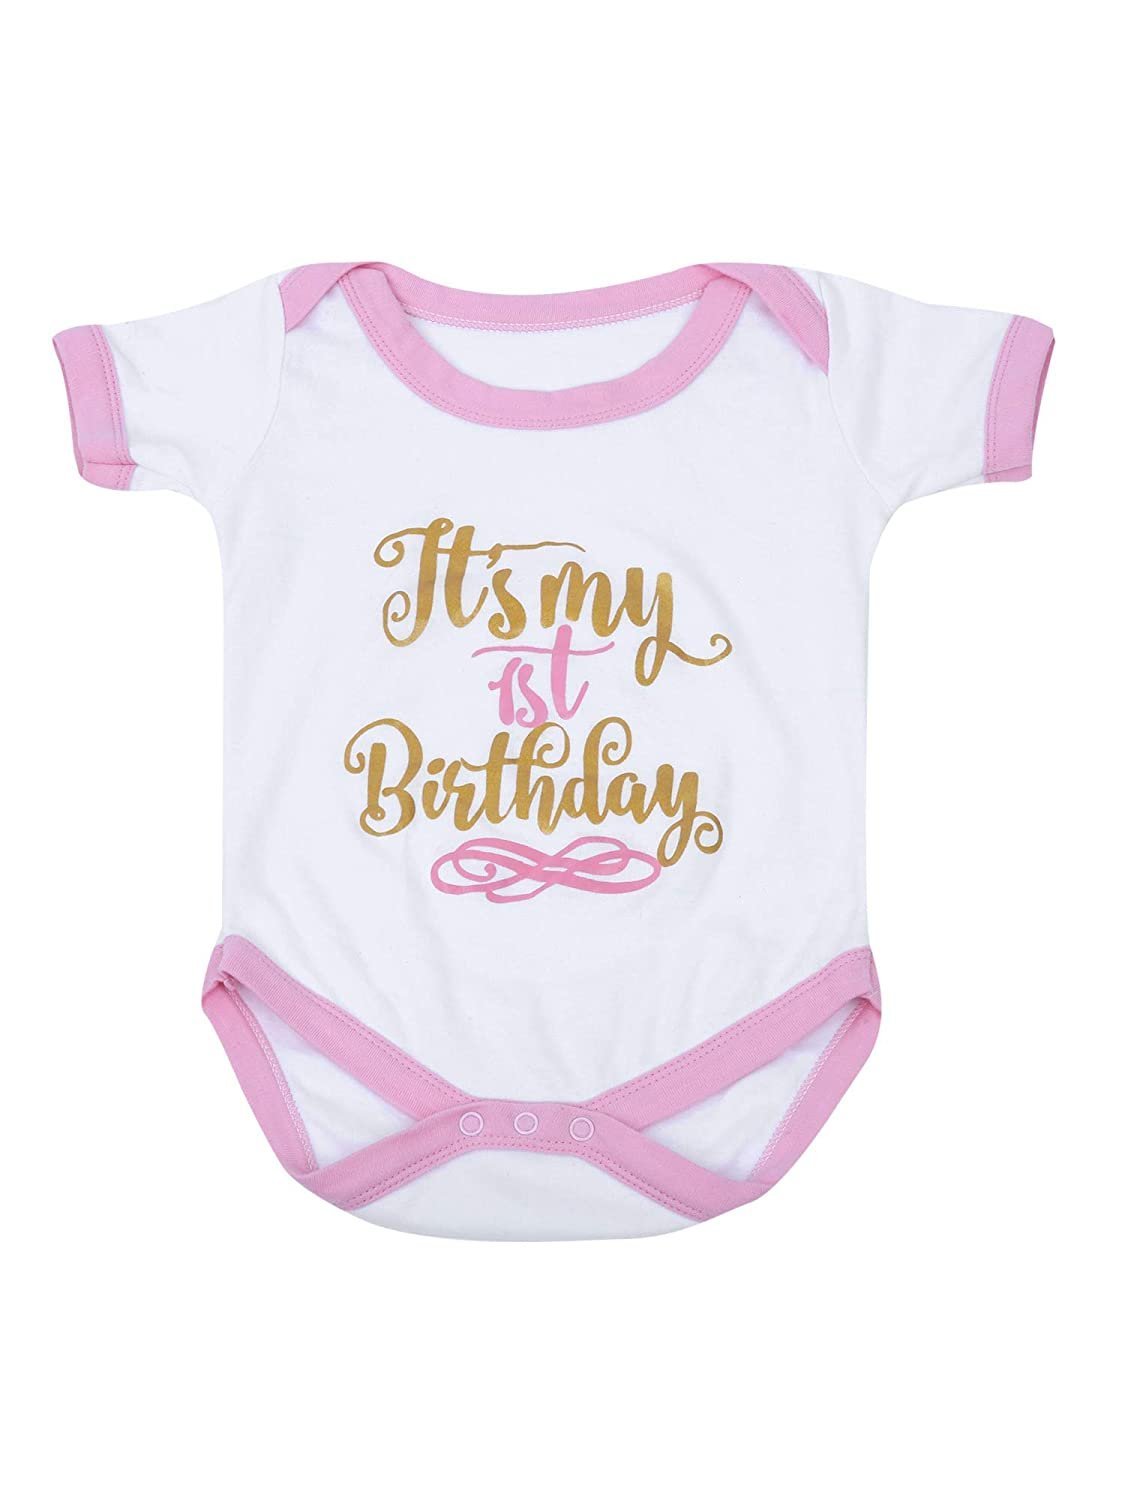 Baby Girl First Birthday Hamper - Little Surprise BoxBaby Girl First Birthday Hamper